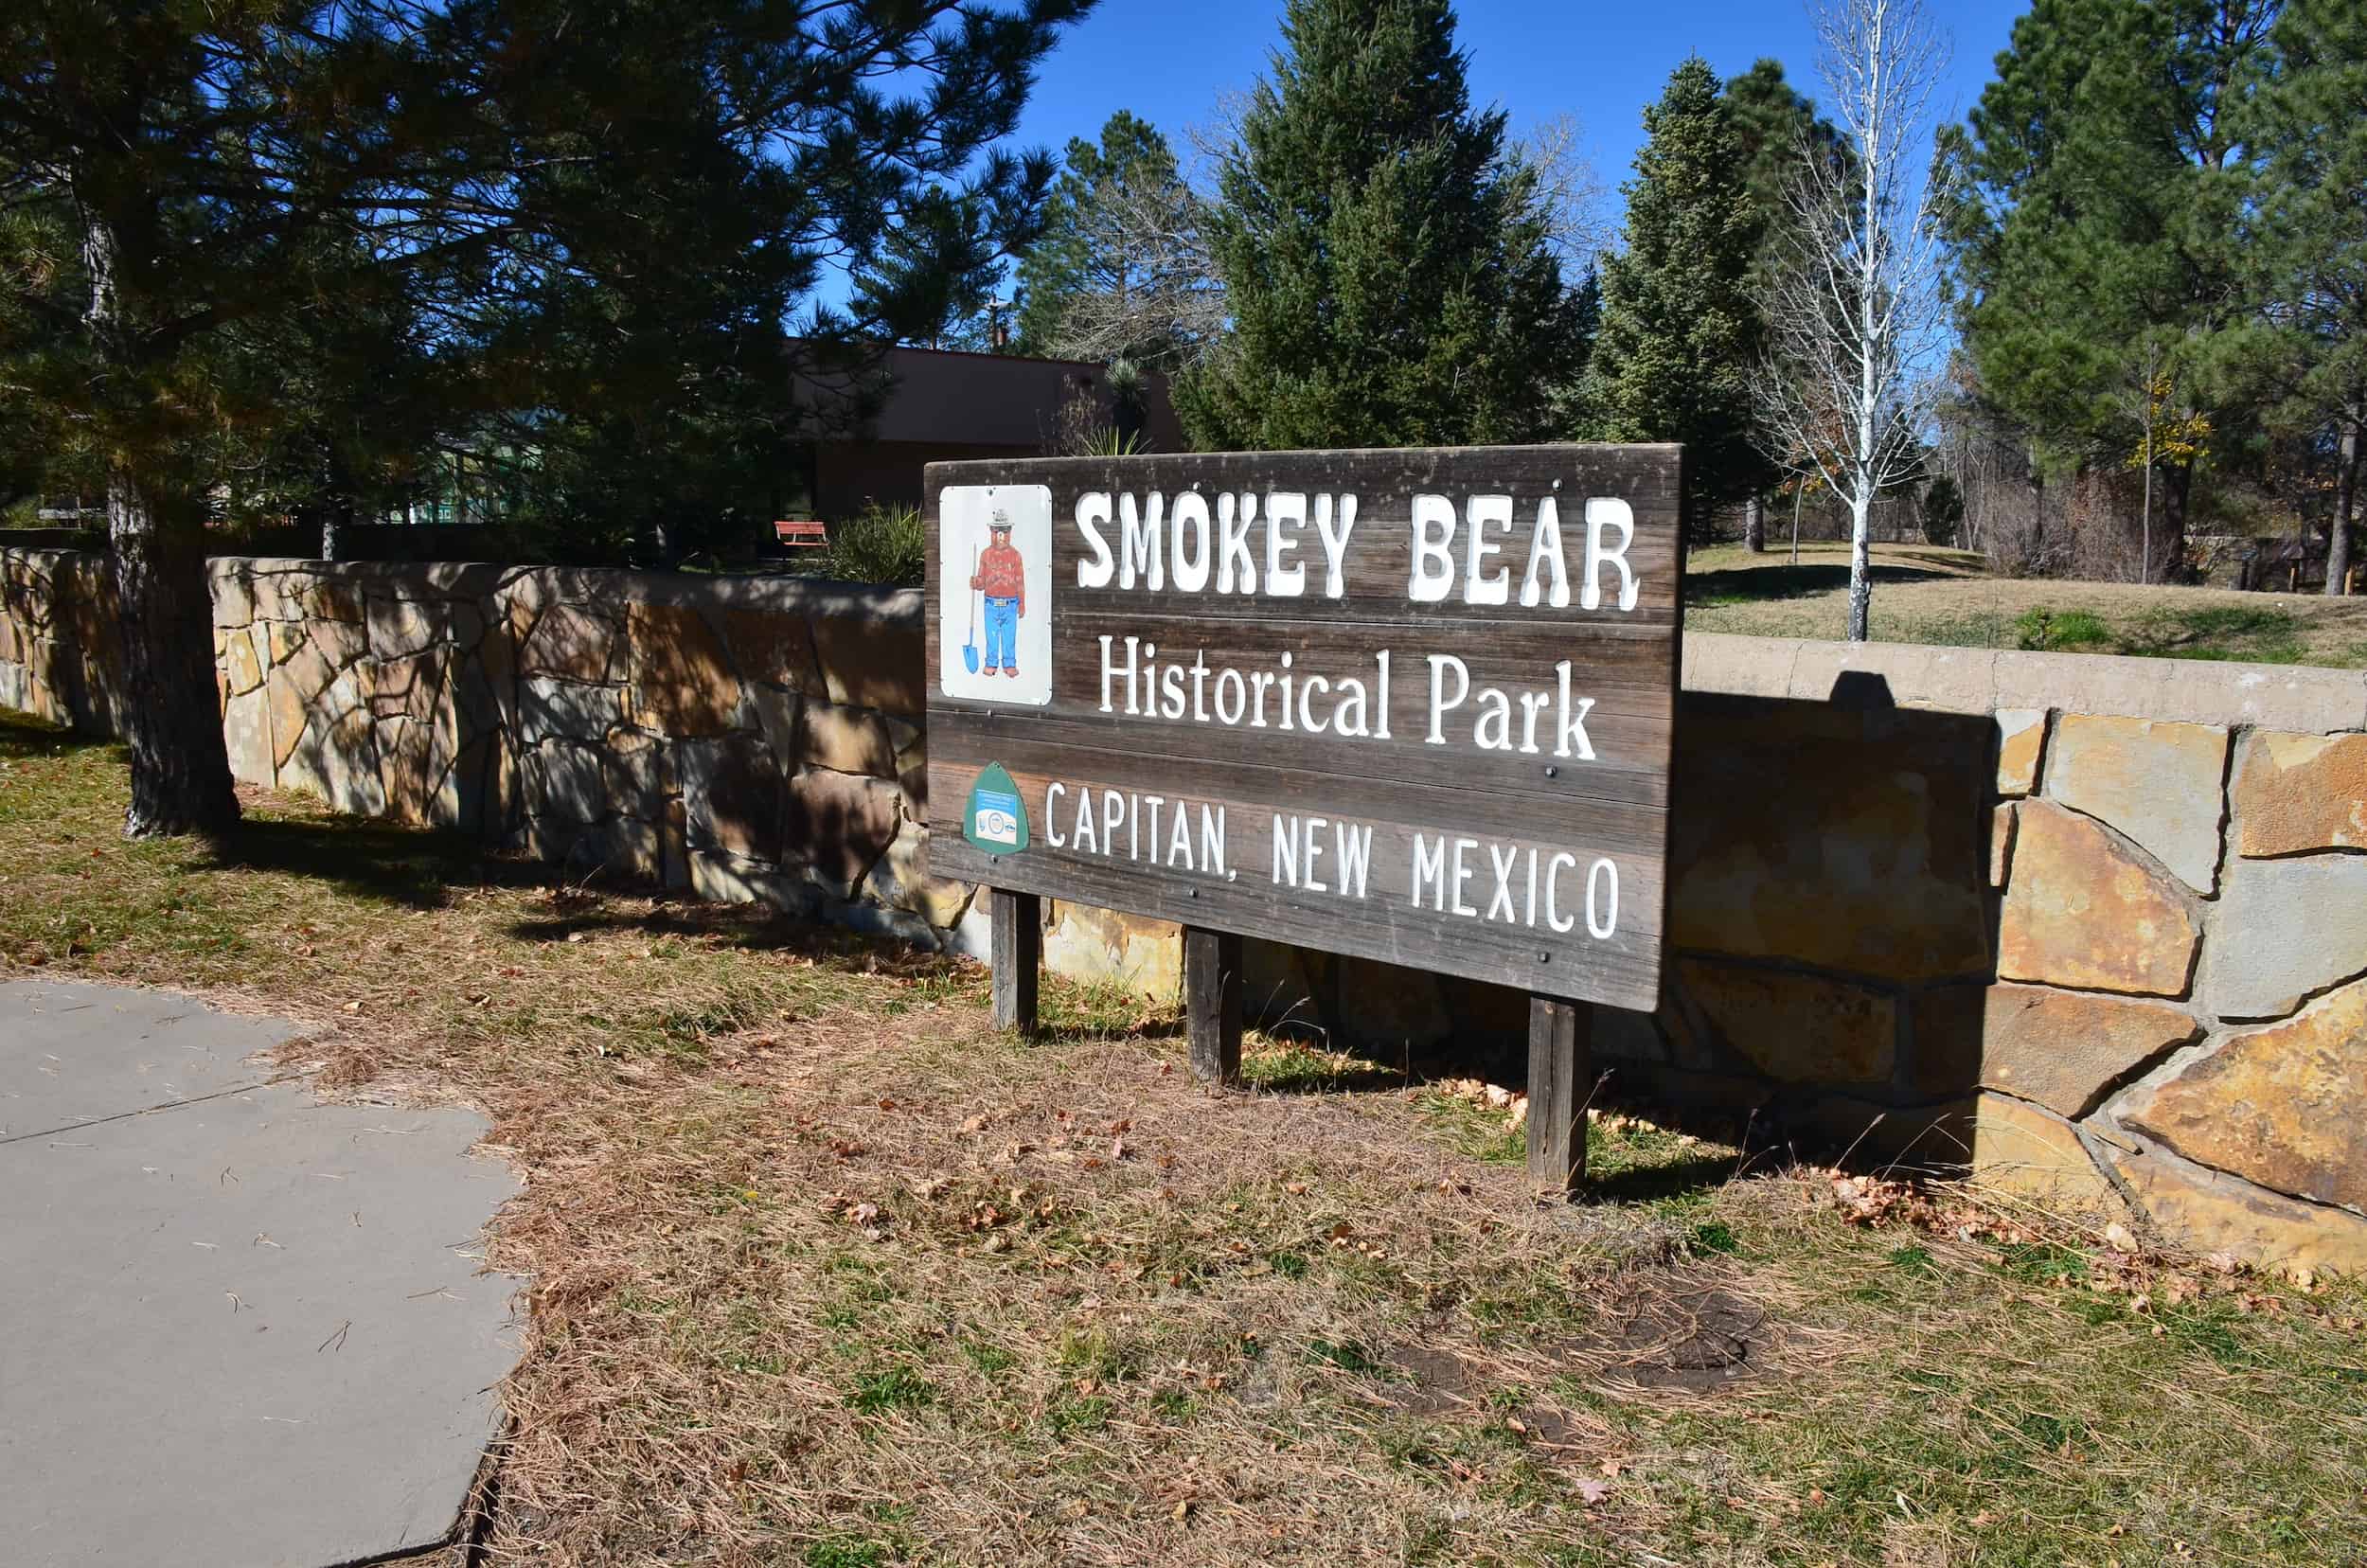 Smokey Bear Historical Park in Capitan, New Mexico